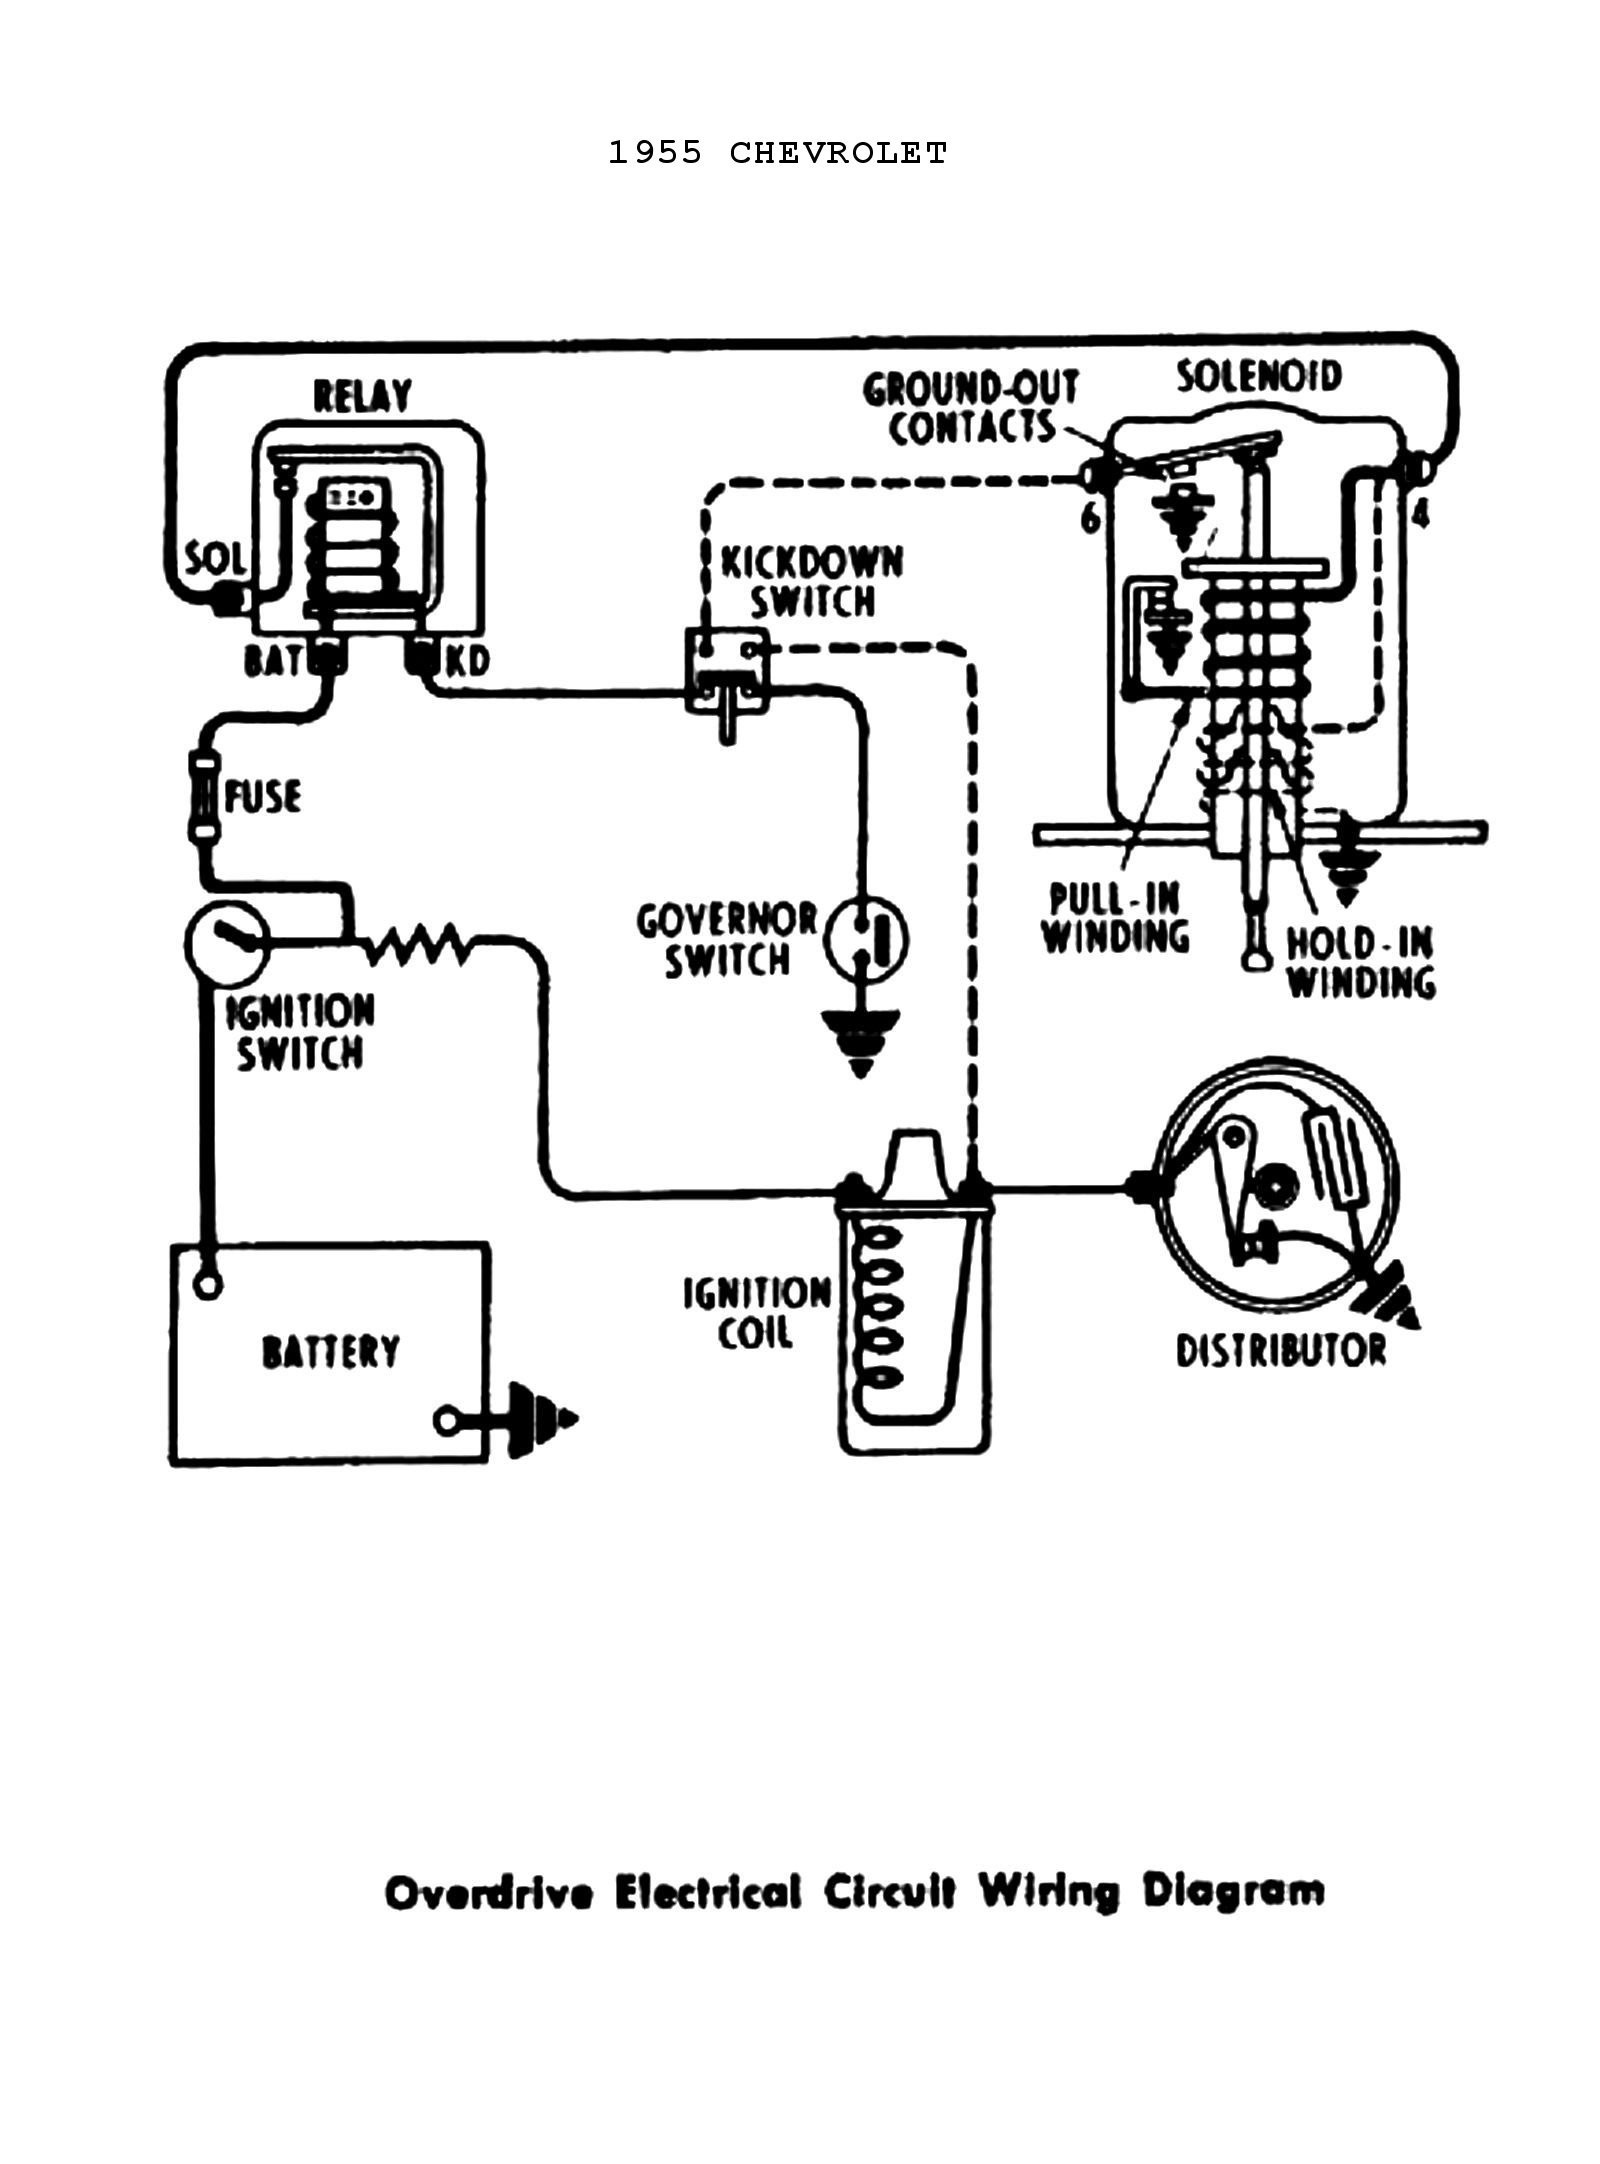 55odtrans1 Random 1956 Chevy Ignition Switch Wiring